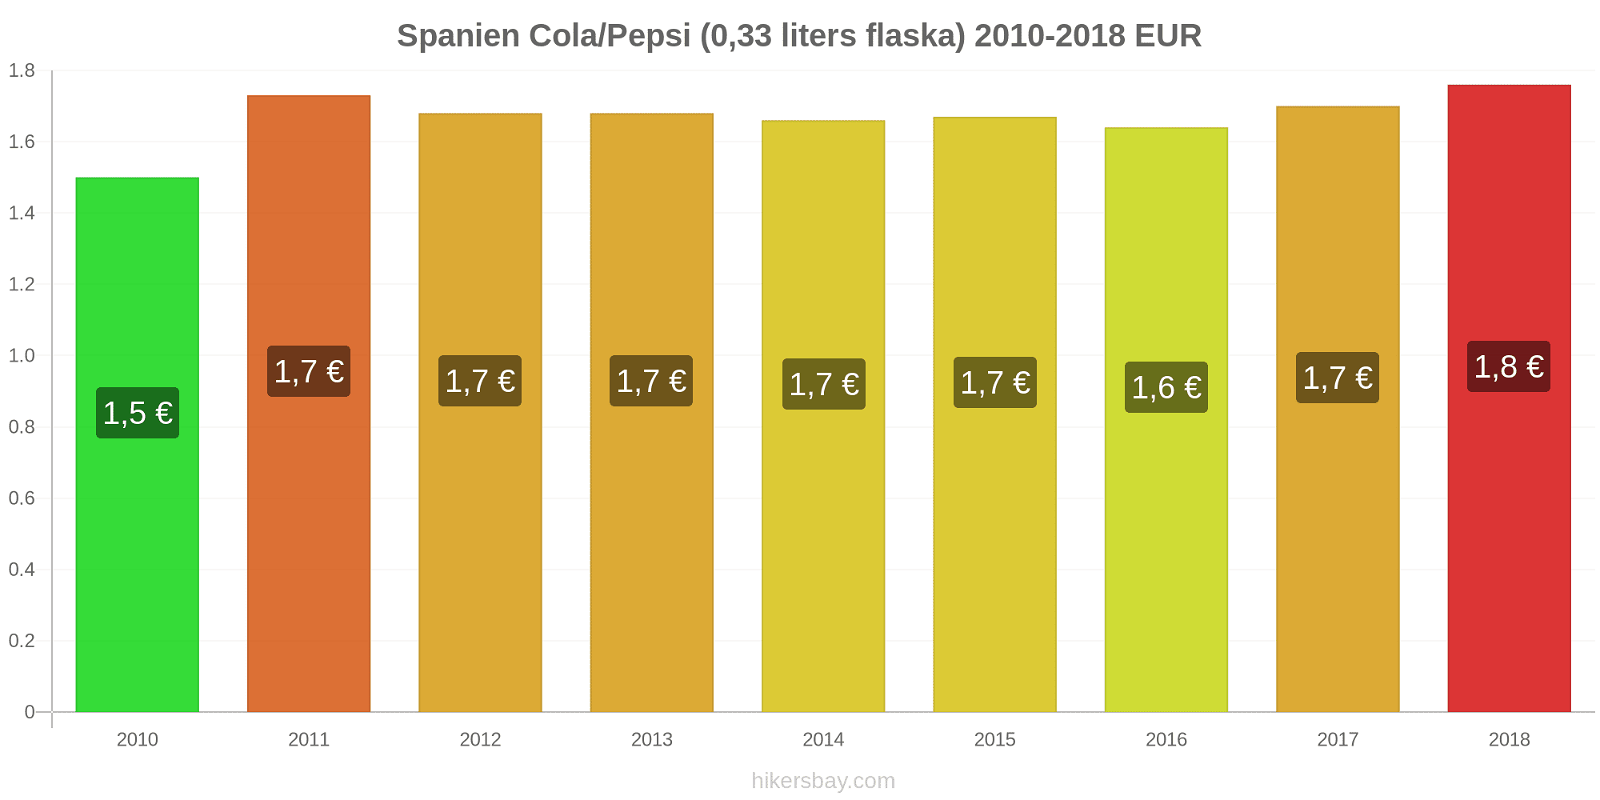 Spanien prisändringar Coca-Cola/Pepsi (0.33 liters flaska) hikersbay.com